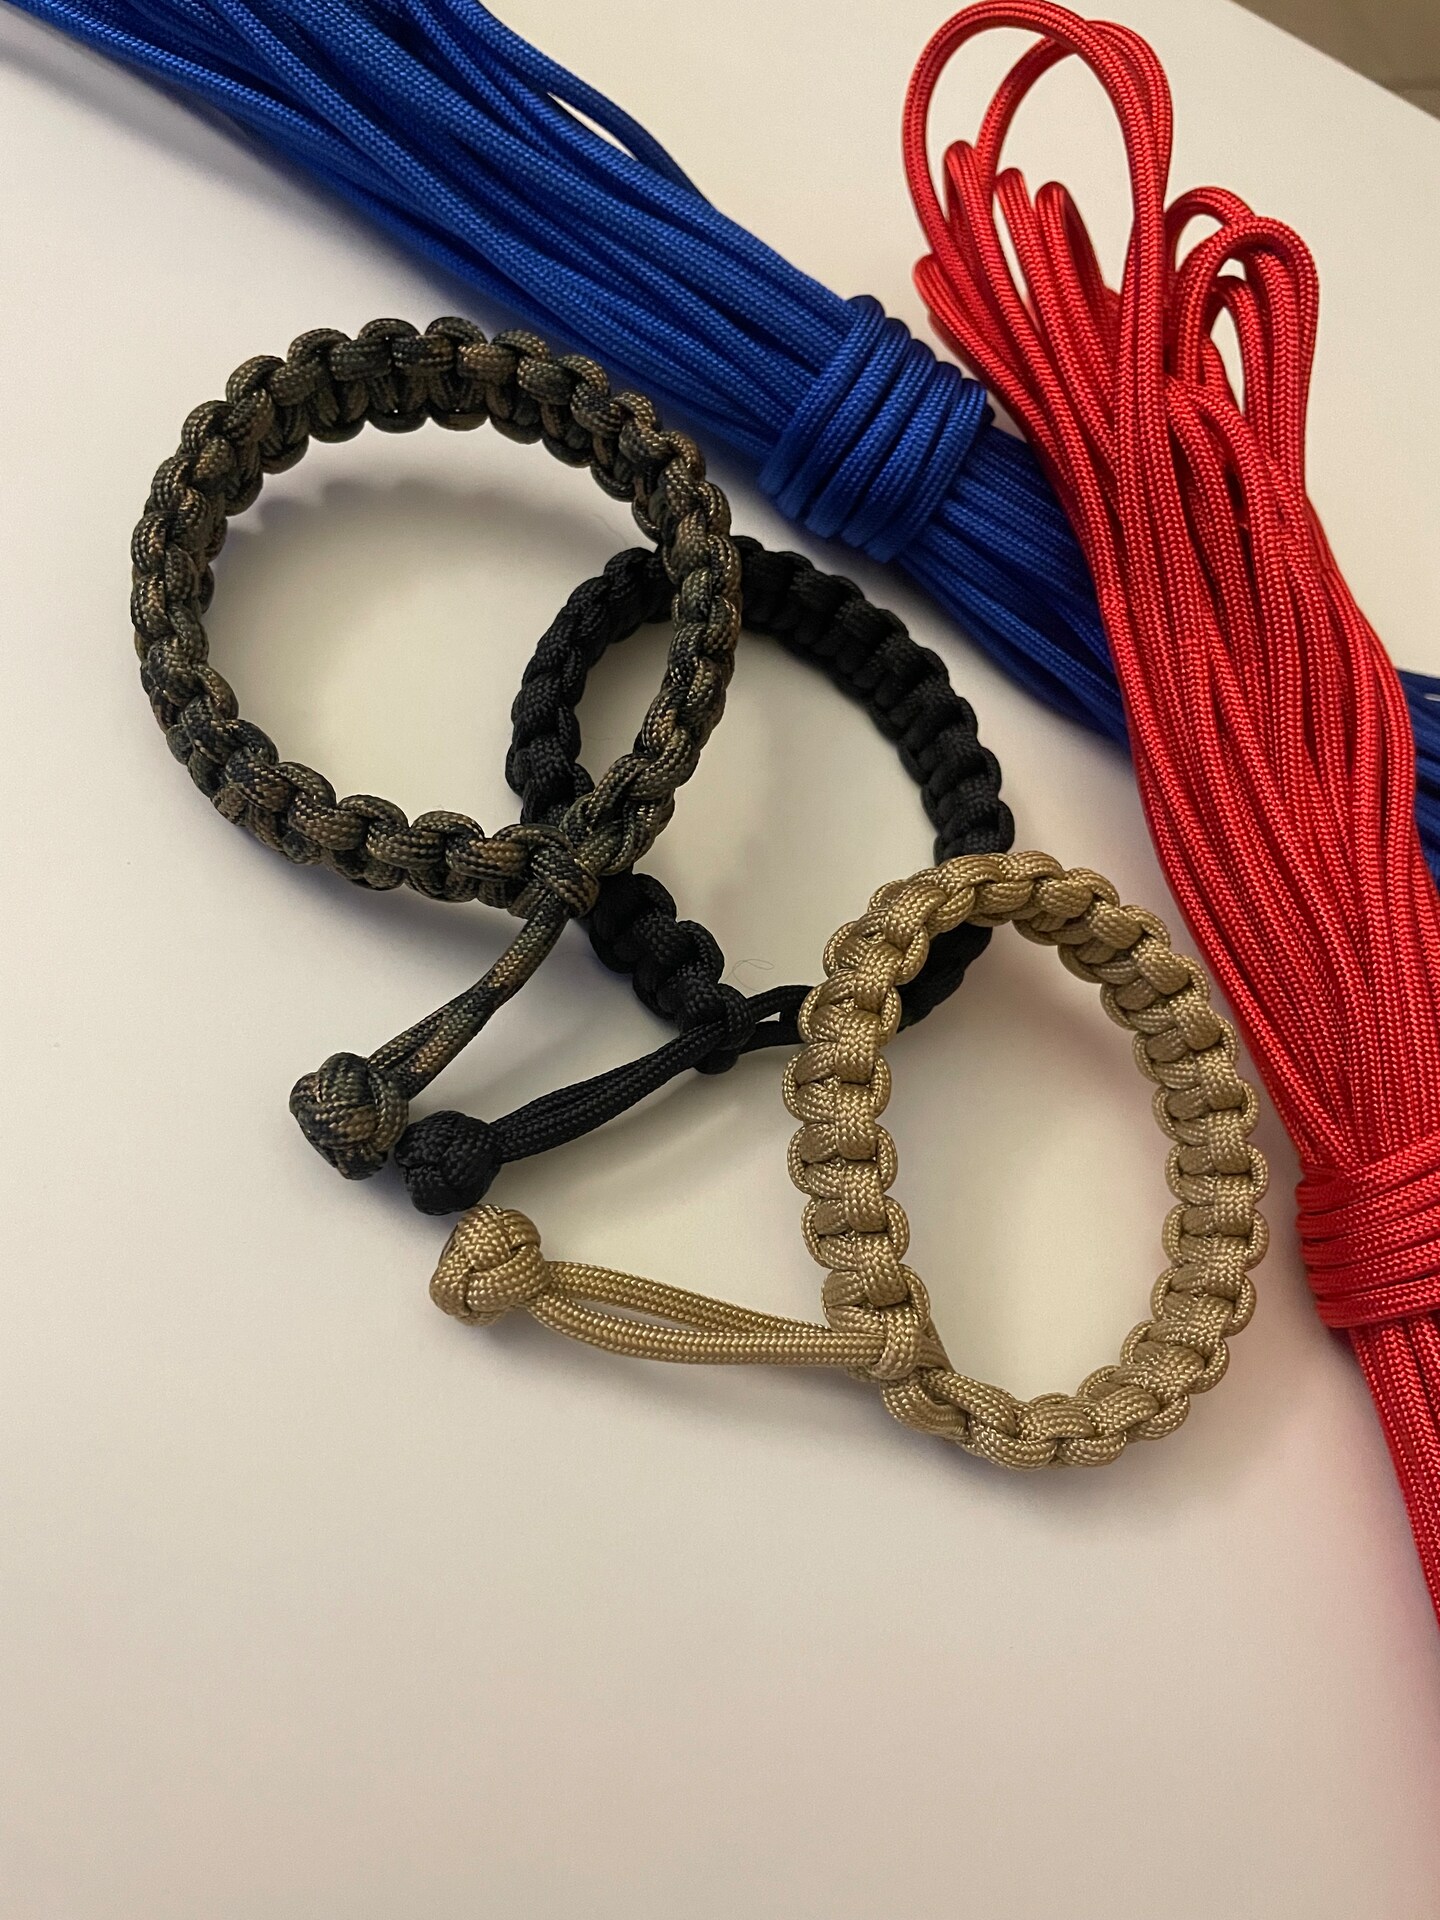 Kids Stitched Cobra Knot Glow in the Dark Bracelet – Loch Lomond